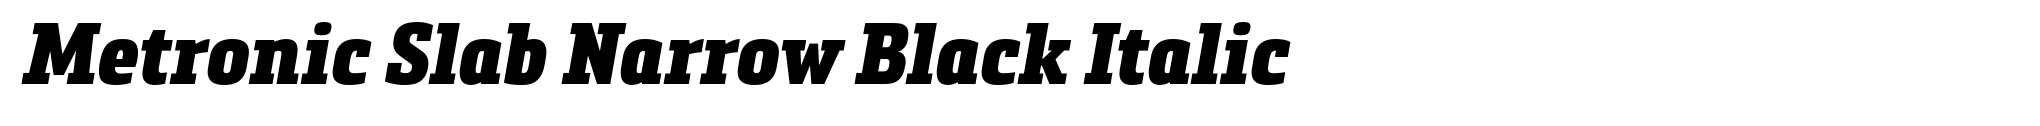 Metronic Slab Narrow Black Italic image